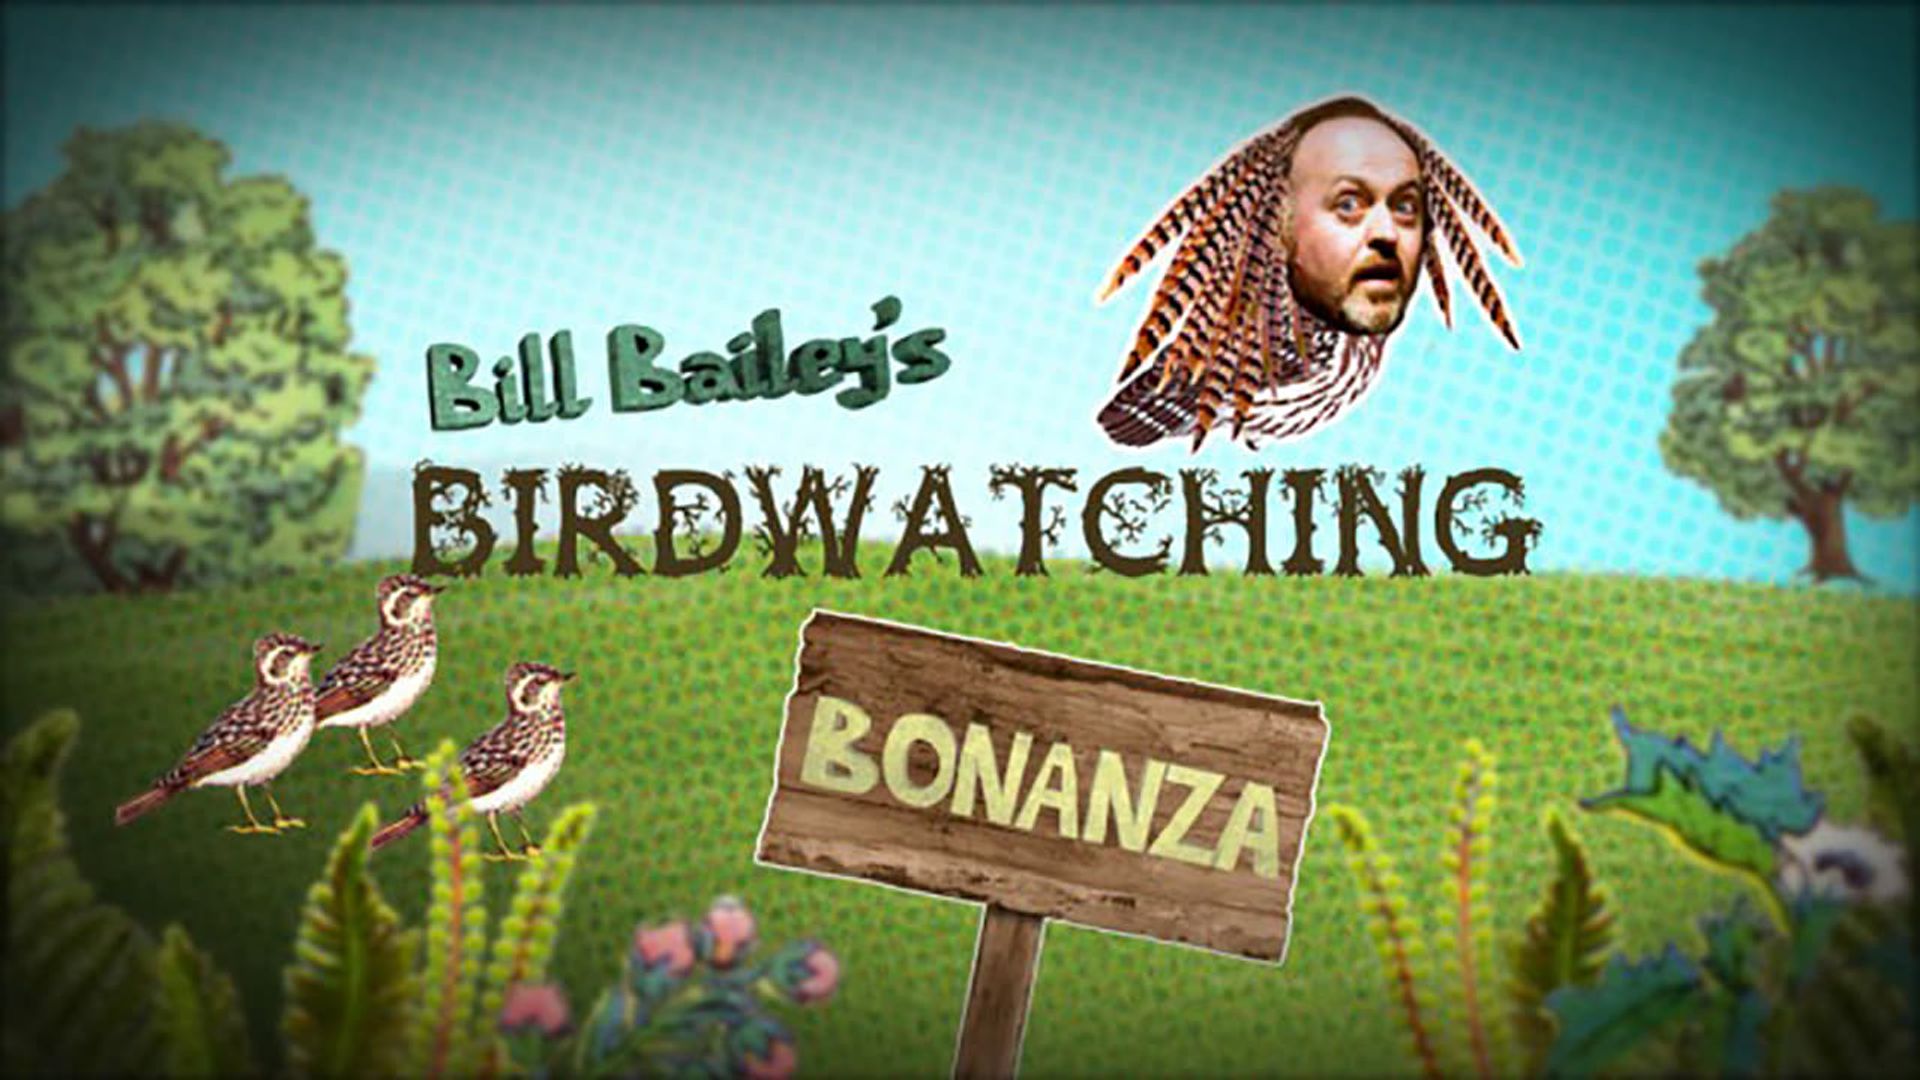 Bill Bailey's Birdwatching Bonanza background